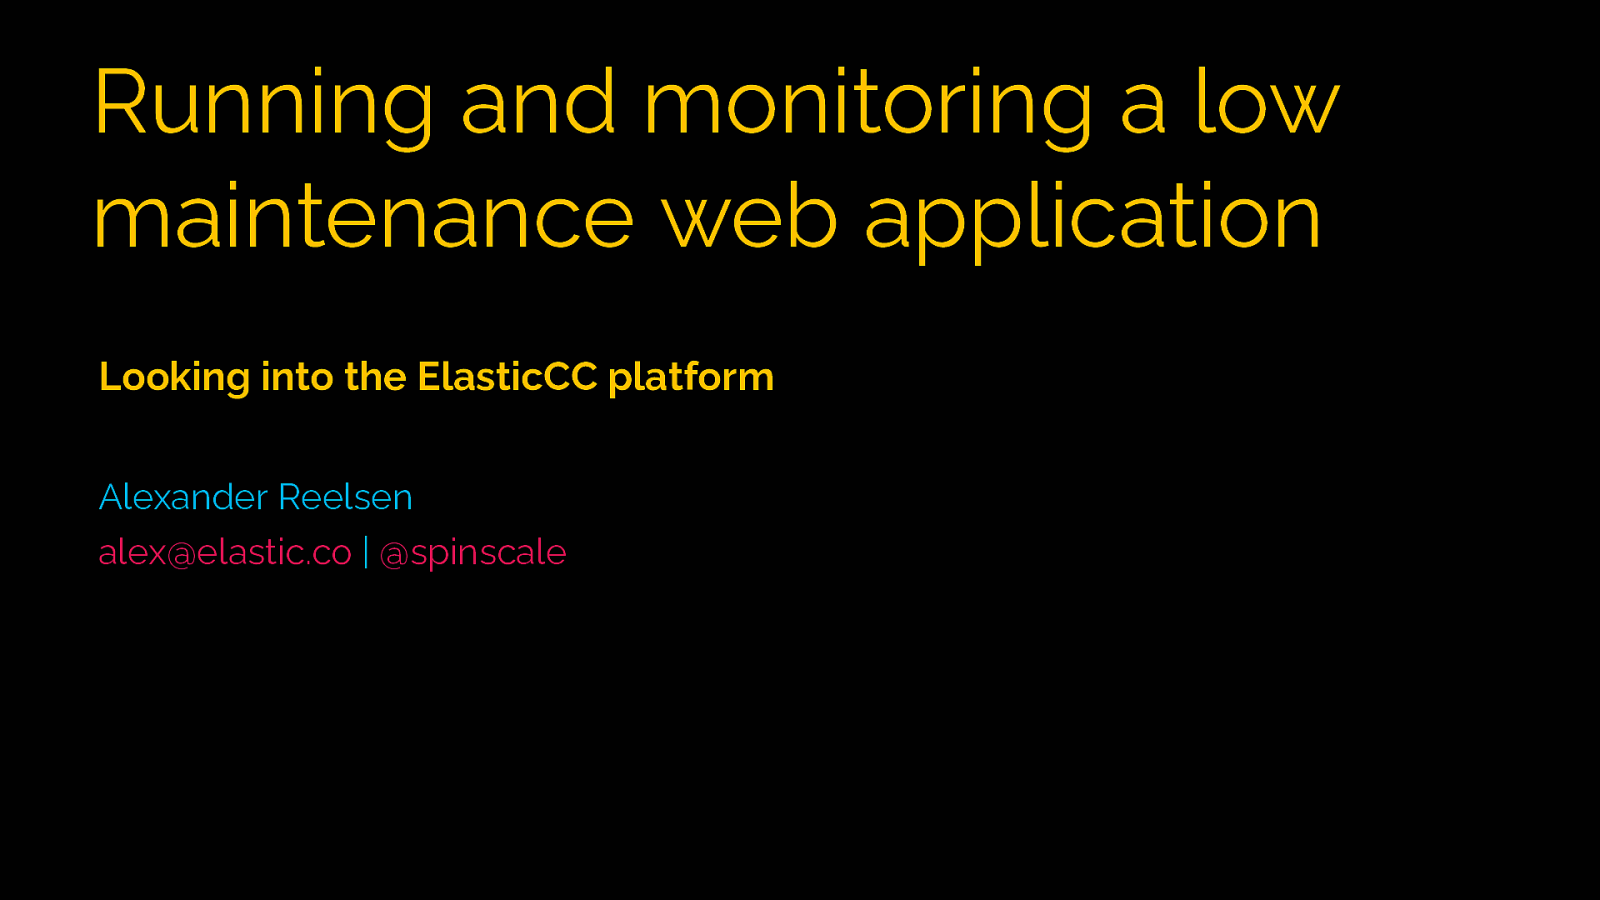 Running and monitoring a low maintenance Java web application